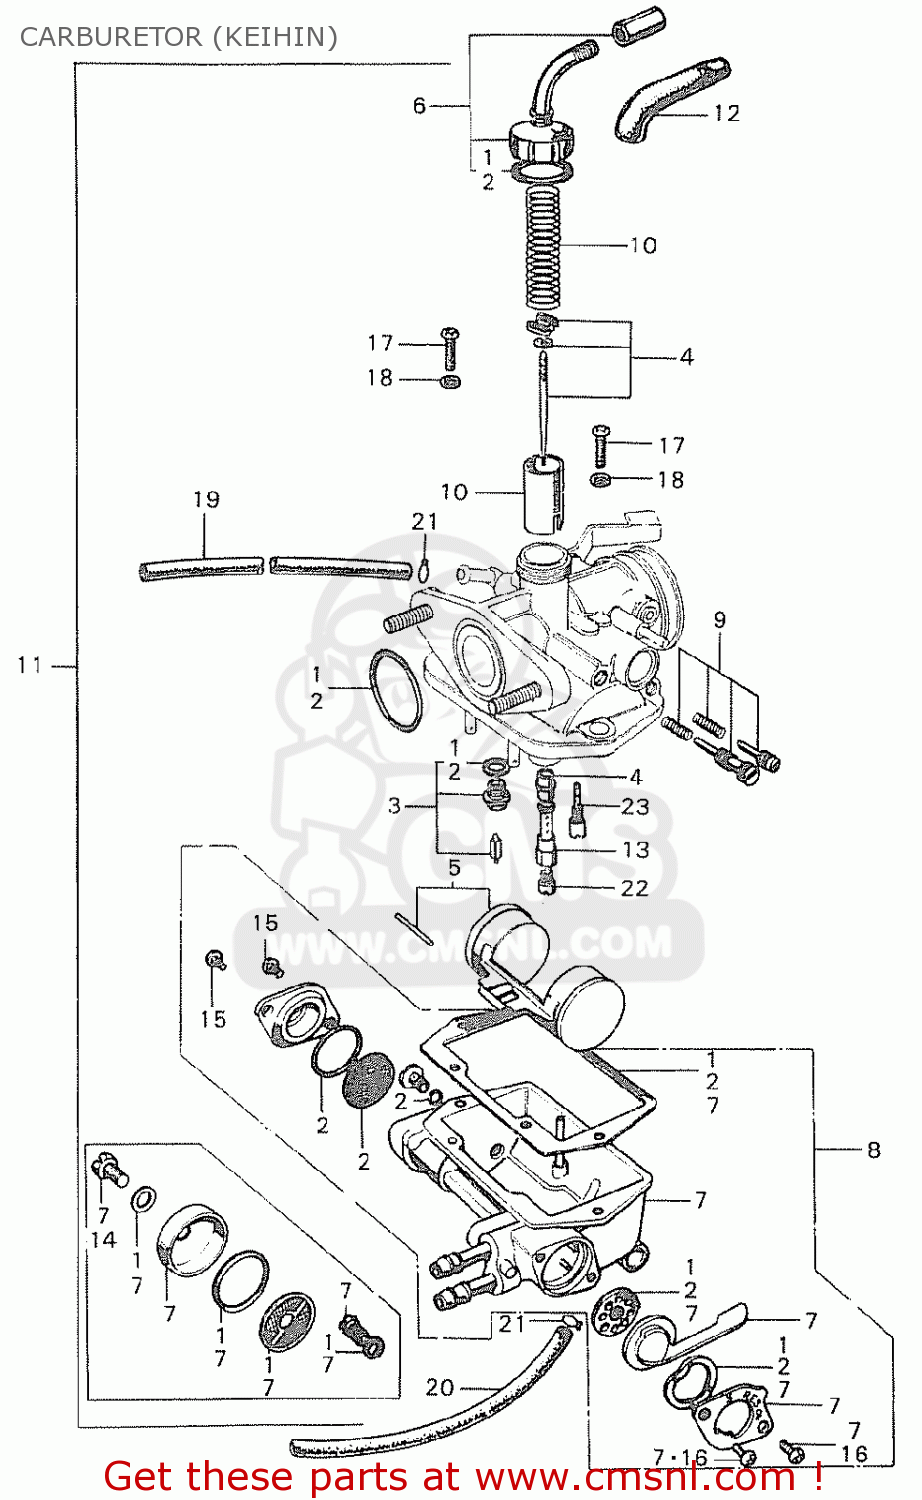 volvo ve d16-535 engine manual